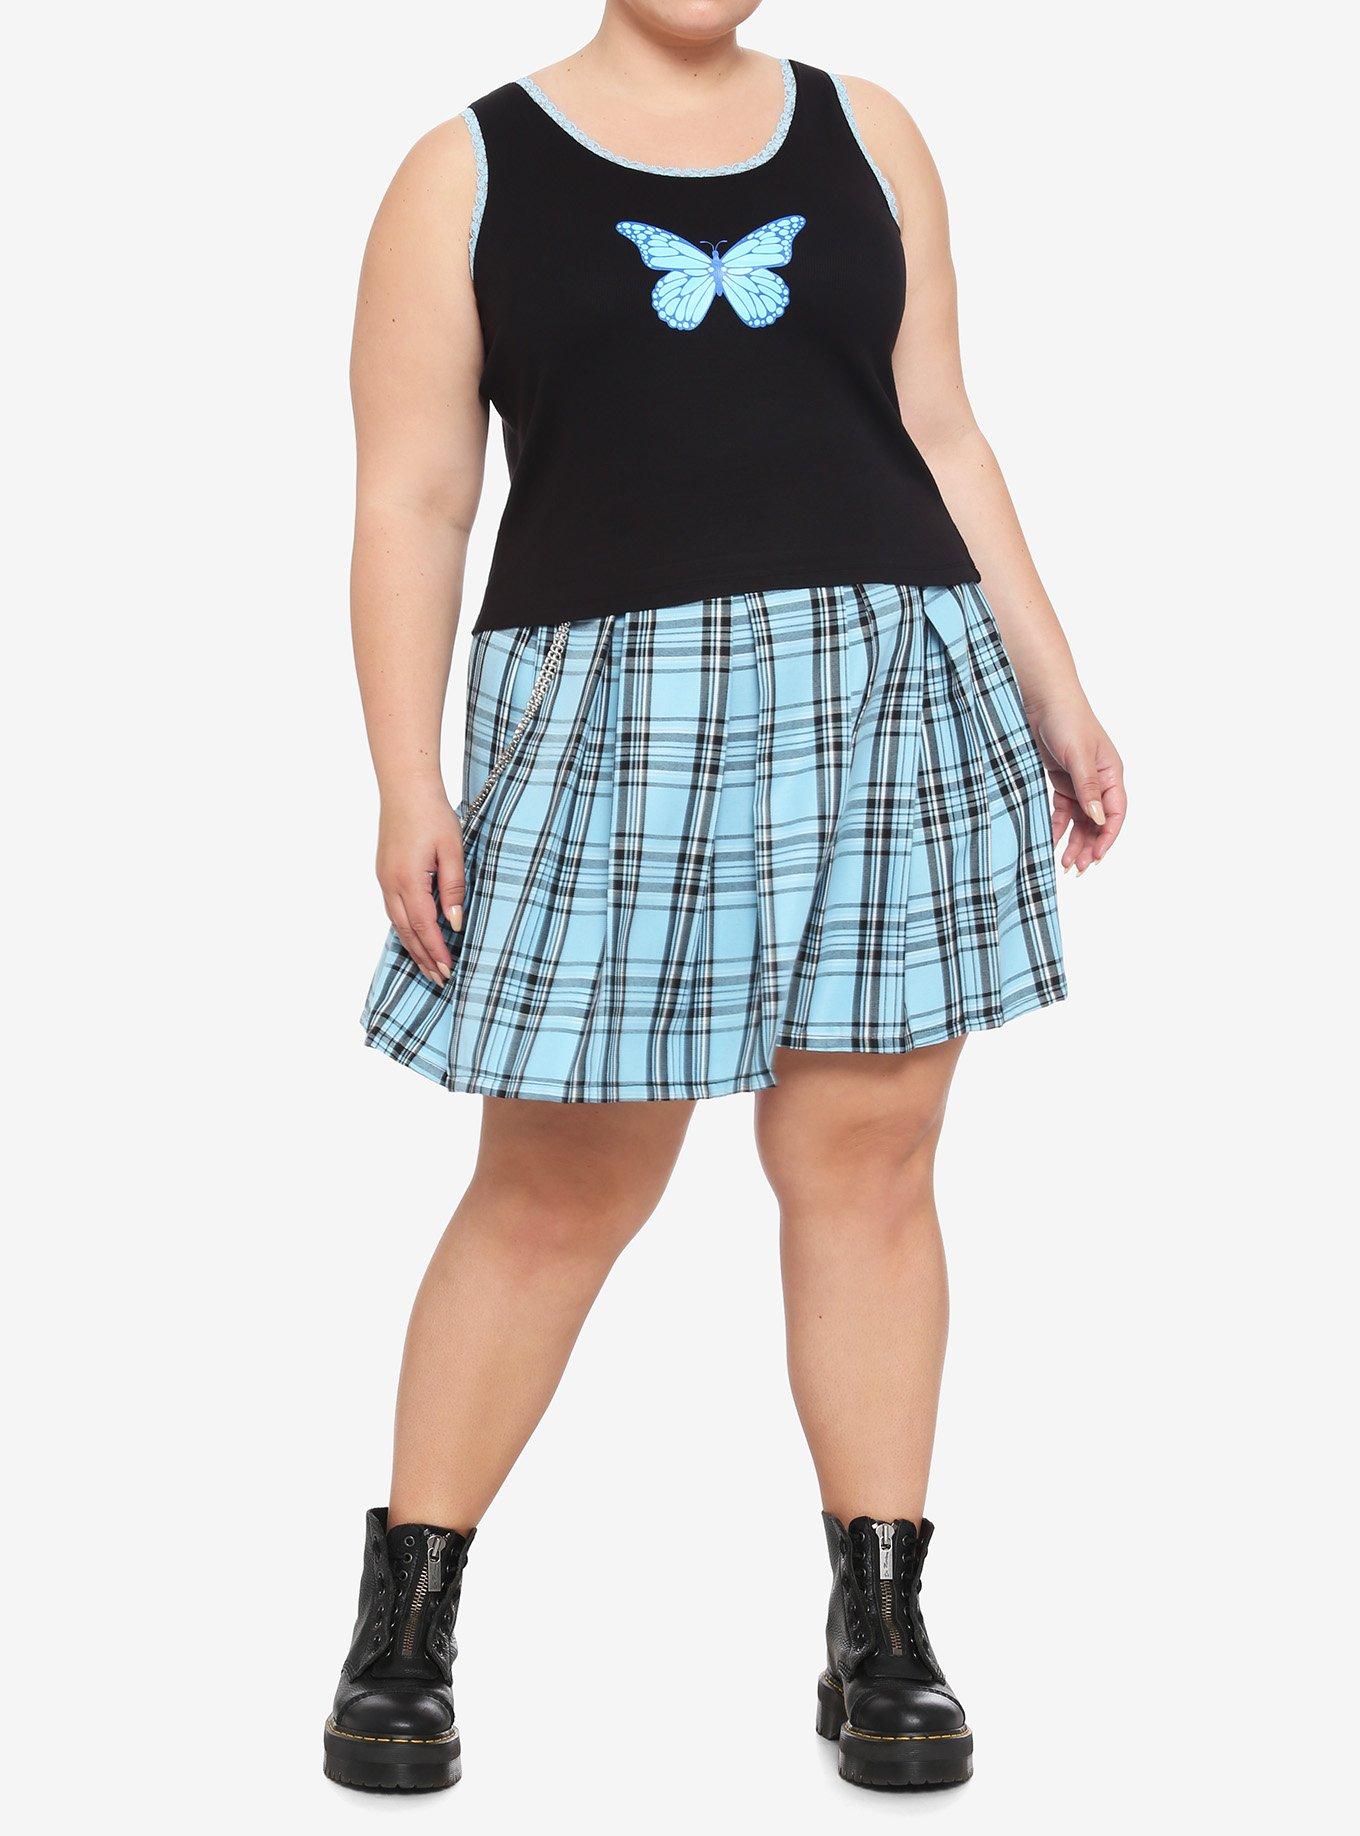 Blue Butterfly Lace Girls Tank Top Plus Size, BLACK, alternate